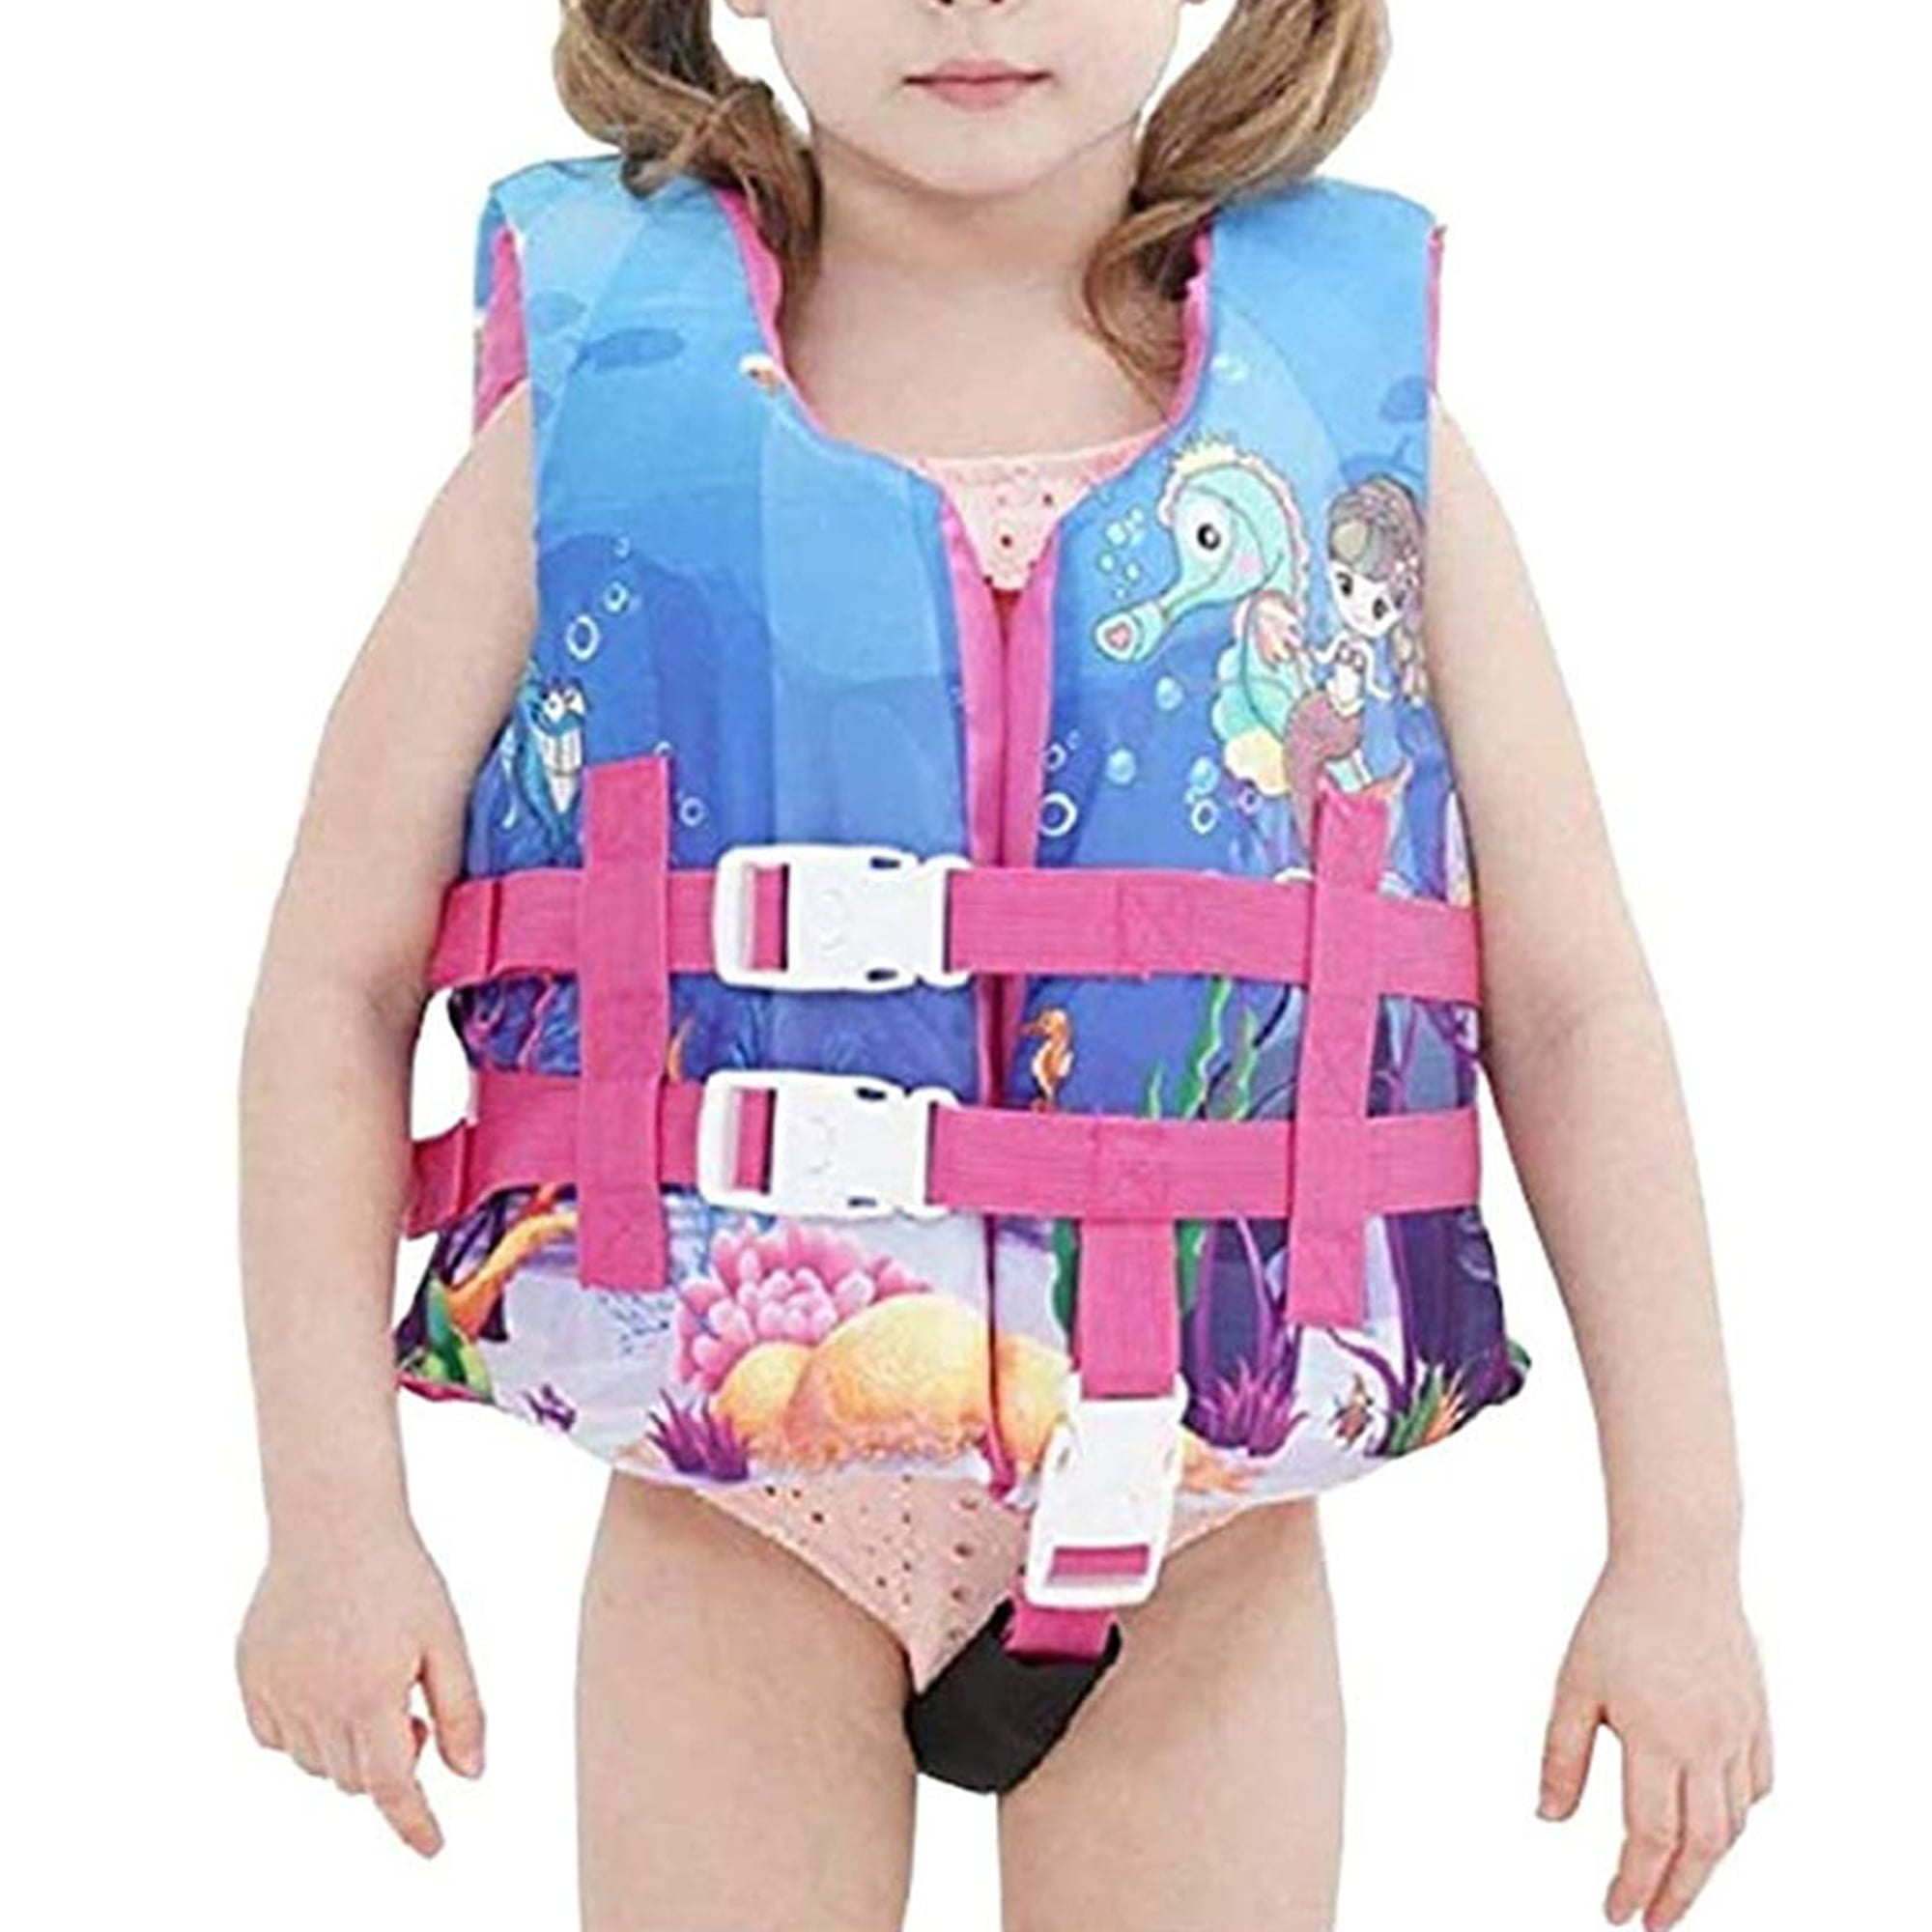 Details about   Splash Childrens Kids Swimming Vest Buoyant Aid Life Jacket 2-3 Yrs Pink 